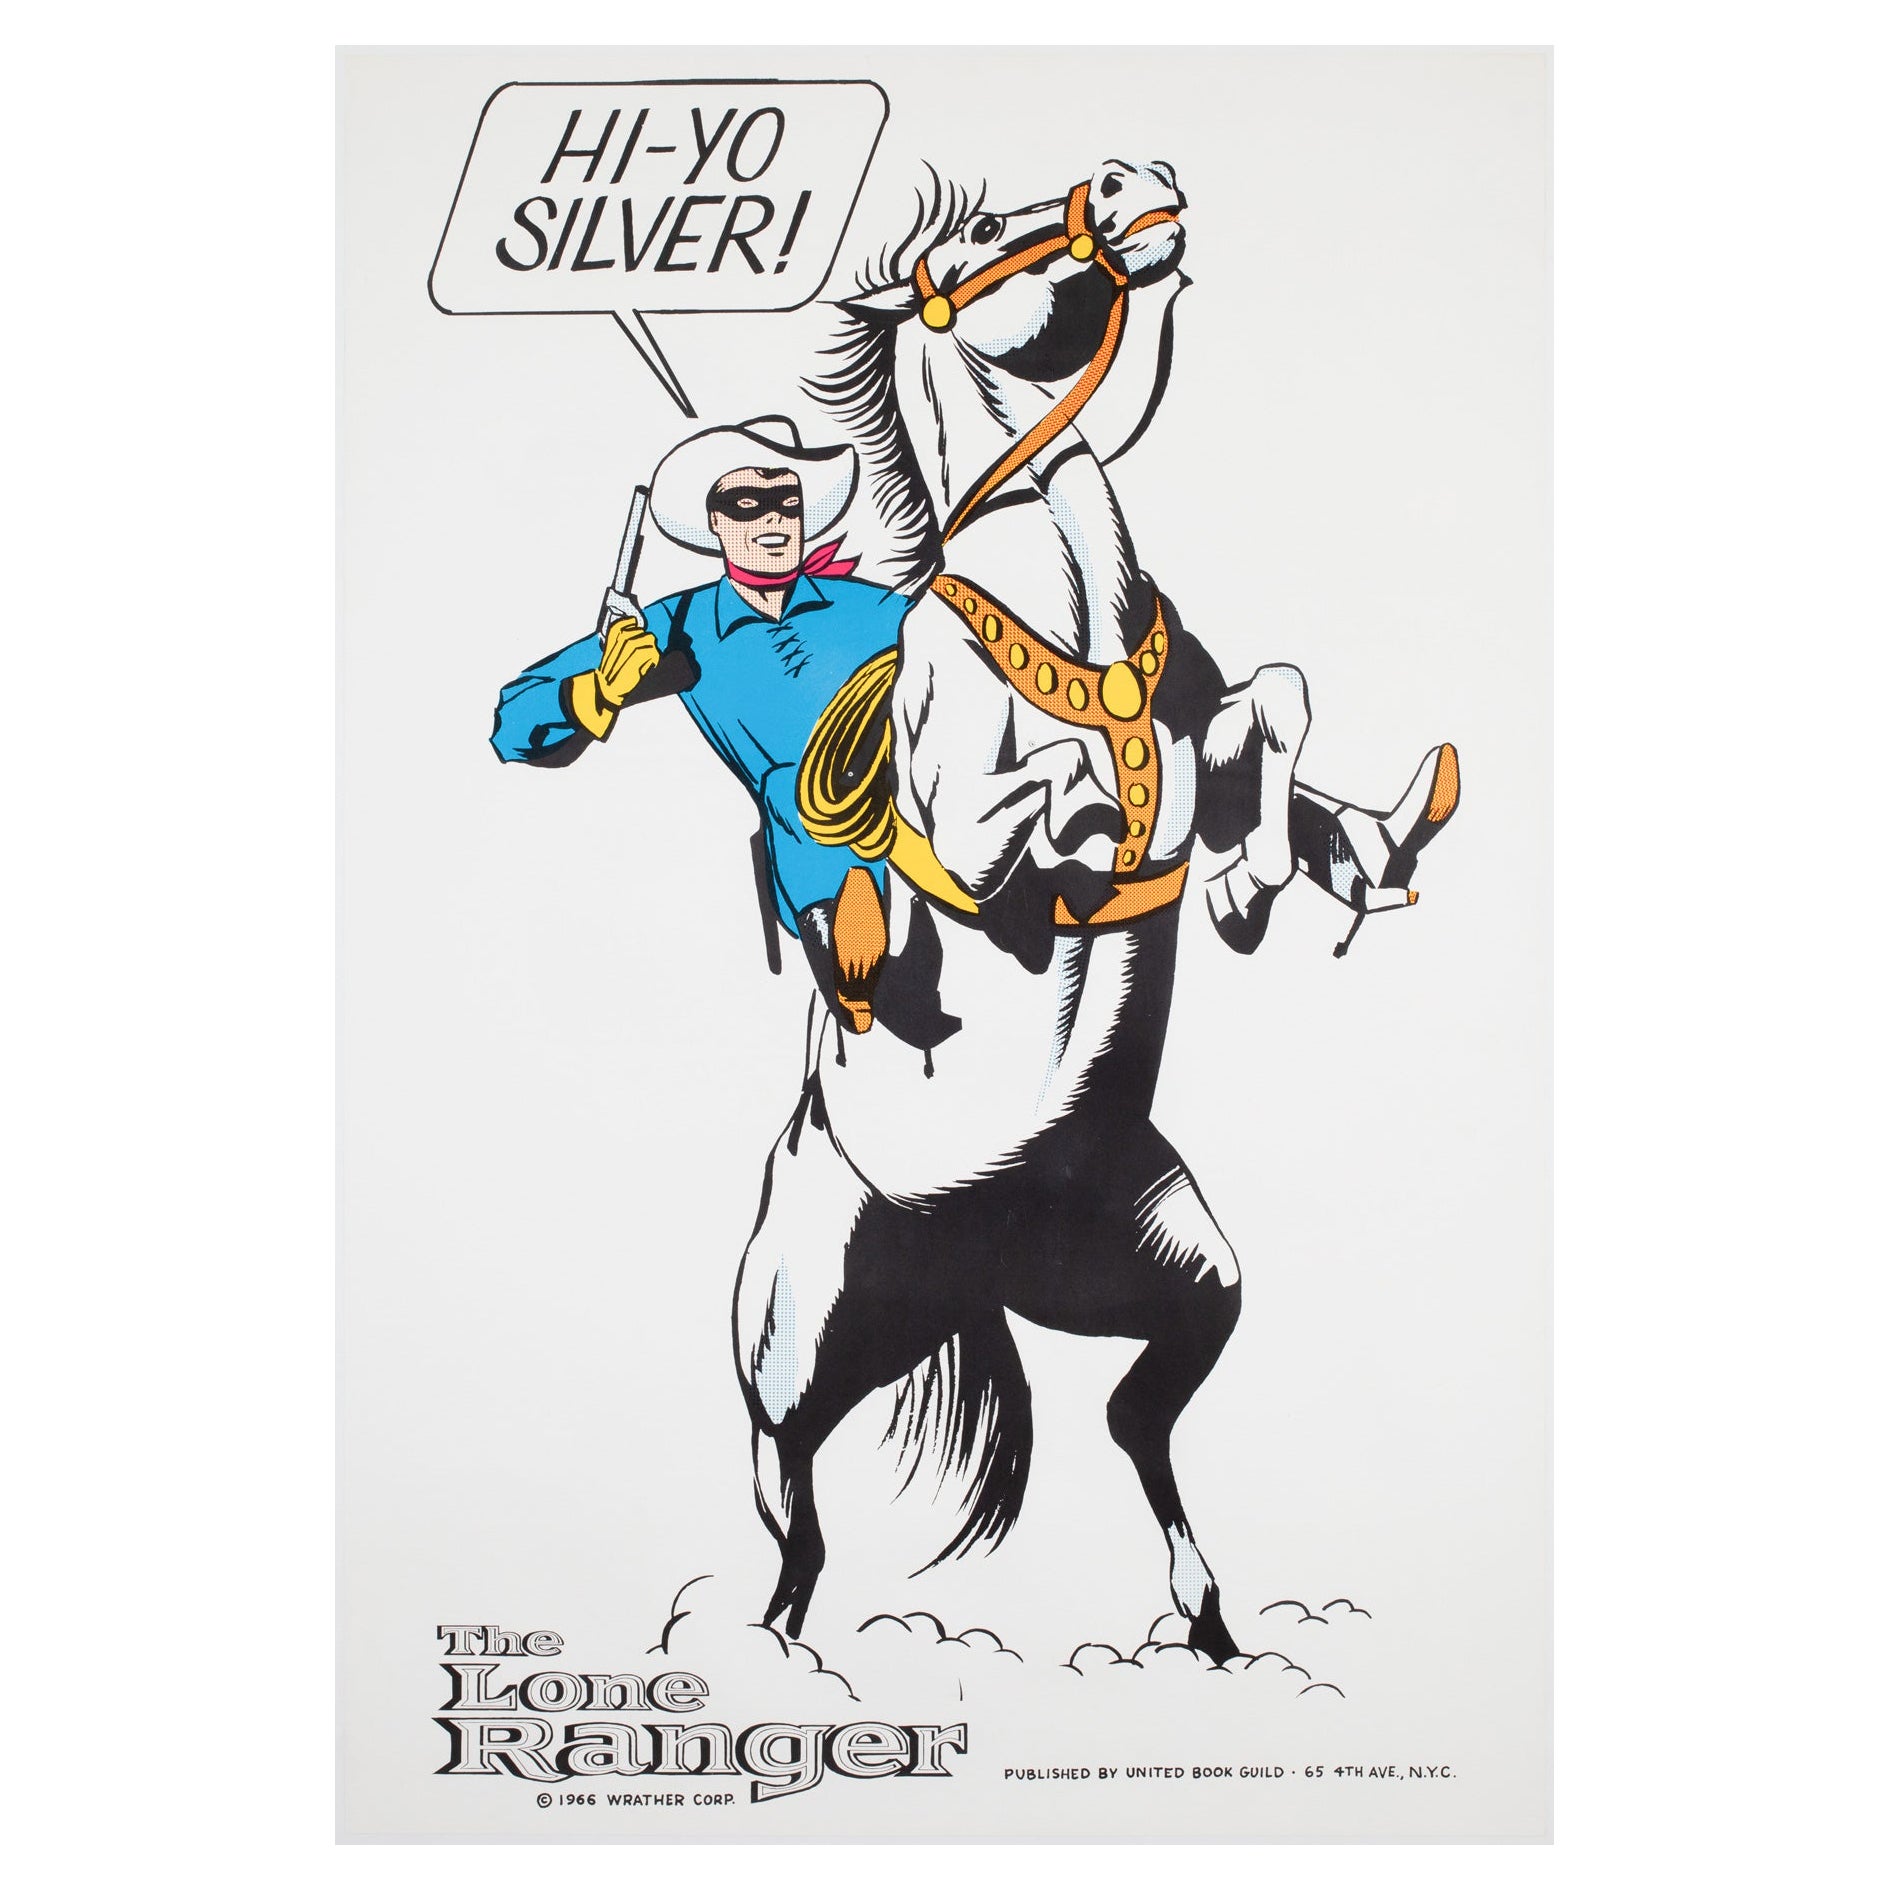 Original Vintage Hi-Yo Silver the Lone Ranger, US Poster, 1966 For Sale